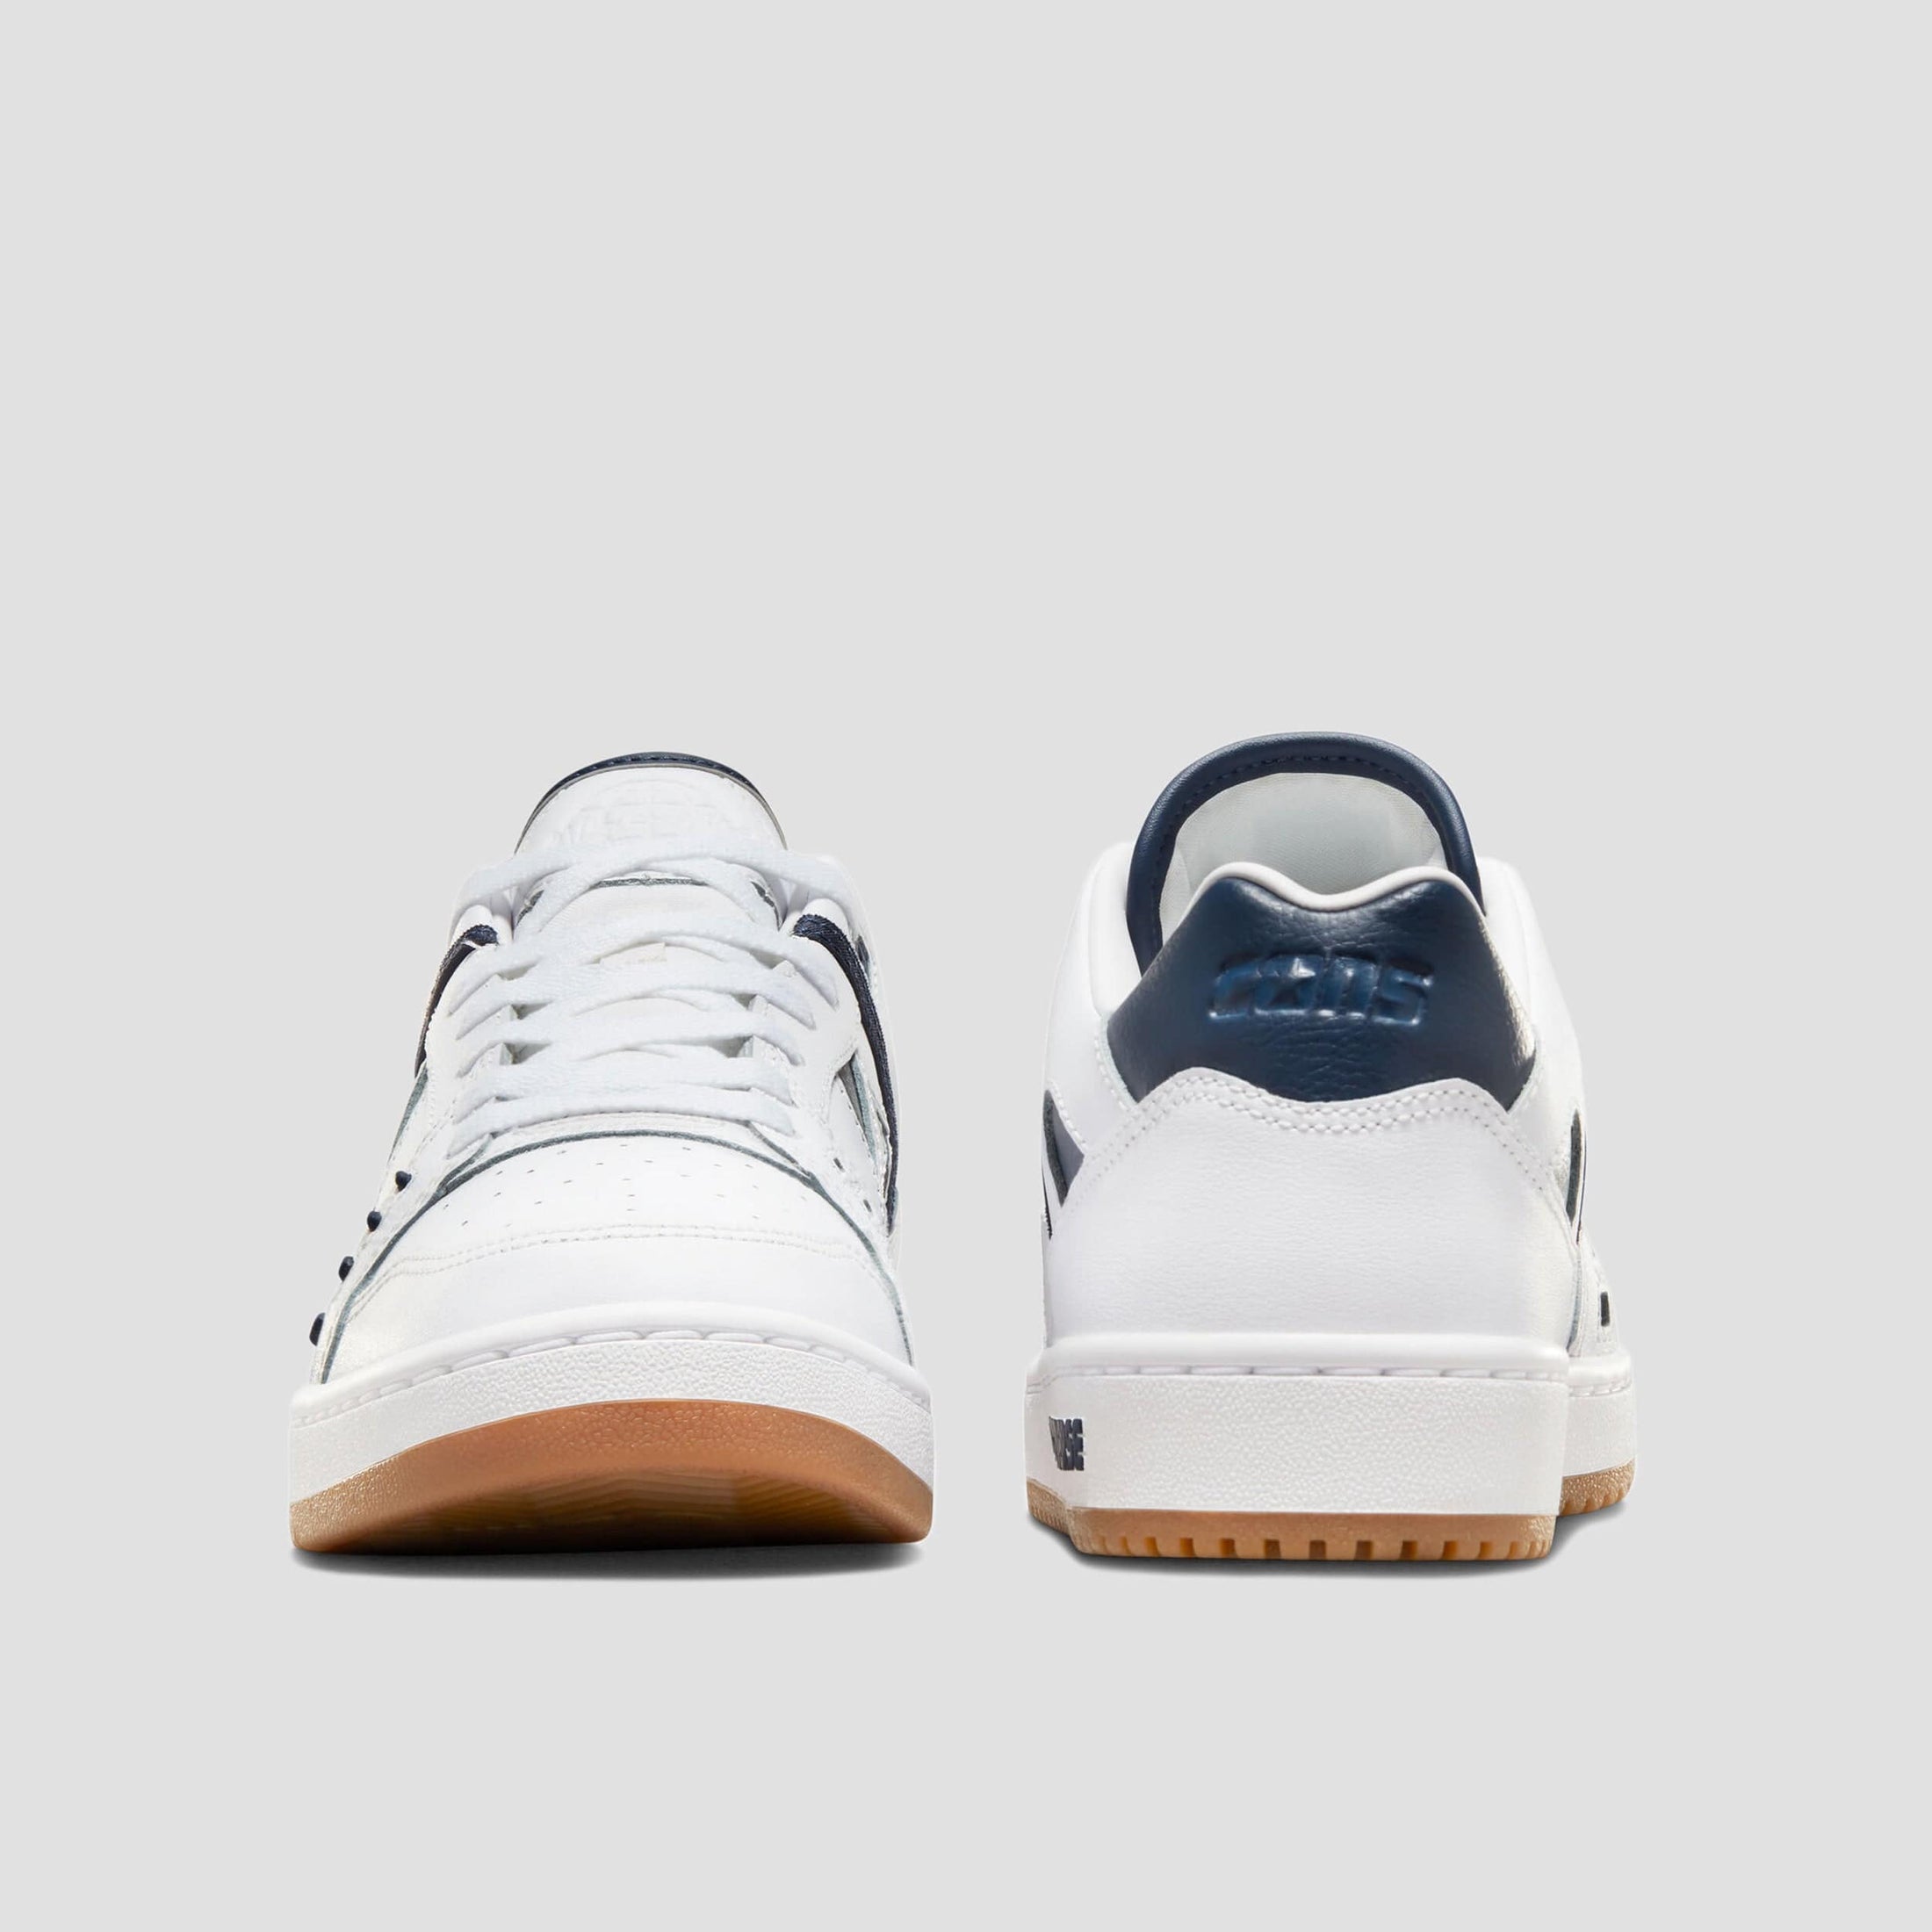 Converse AS-1 Ox Skate Shoes White / Navy / Gum